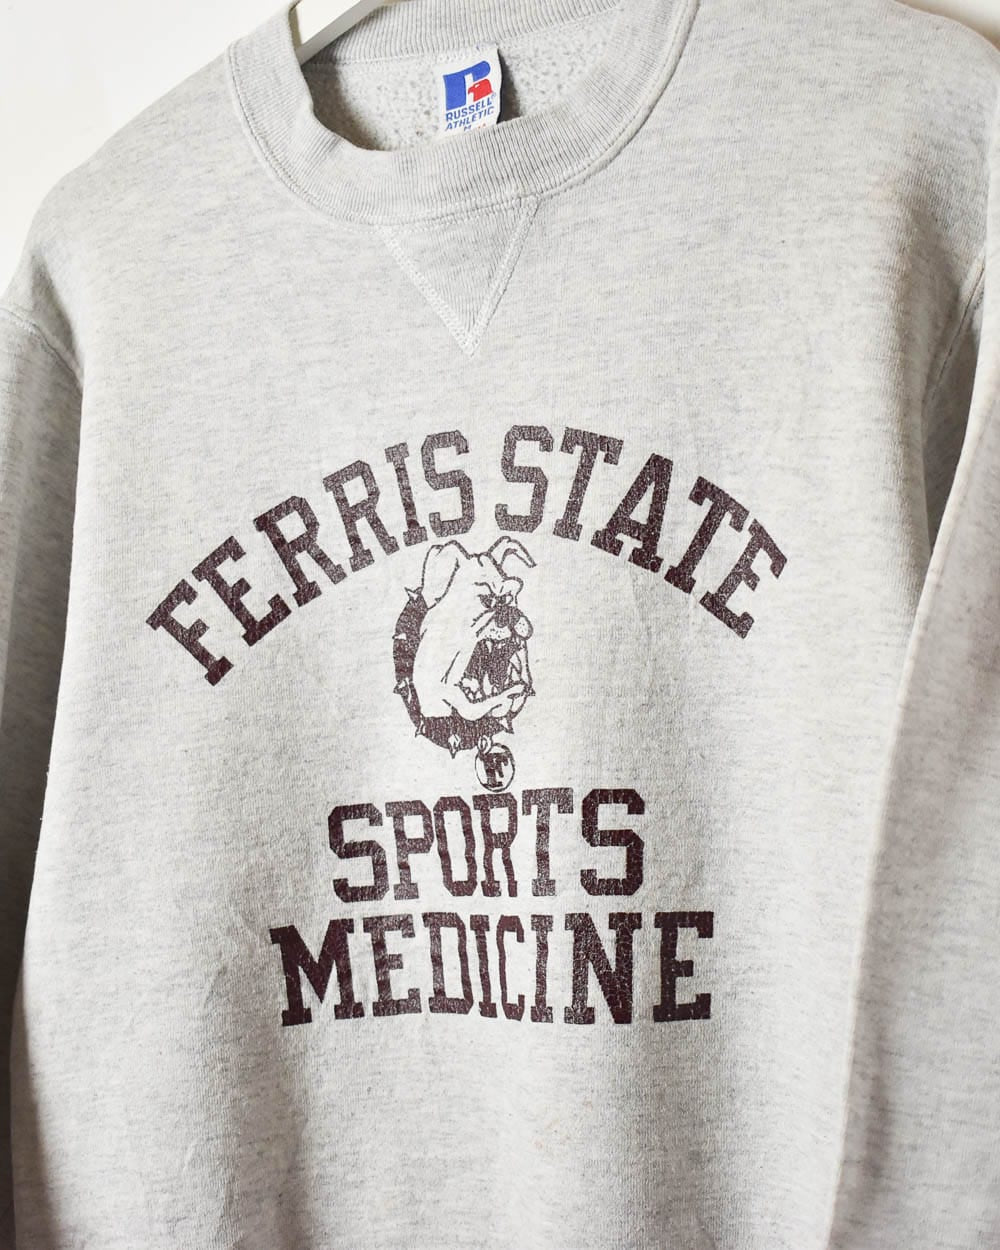 Stone Russell Athletic Ferris State Sports Medicine Sweatshirt - X-Small